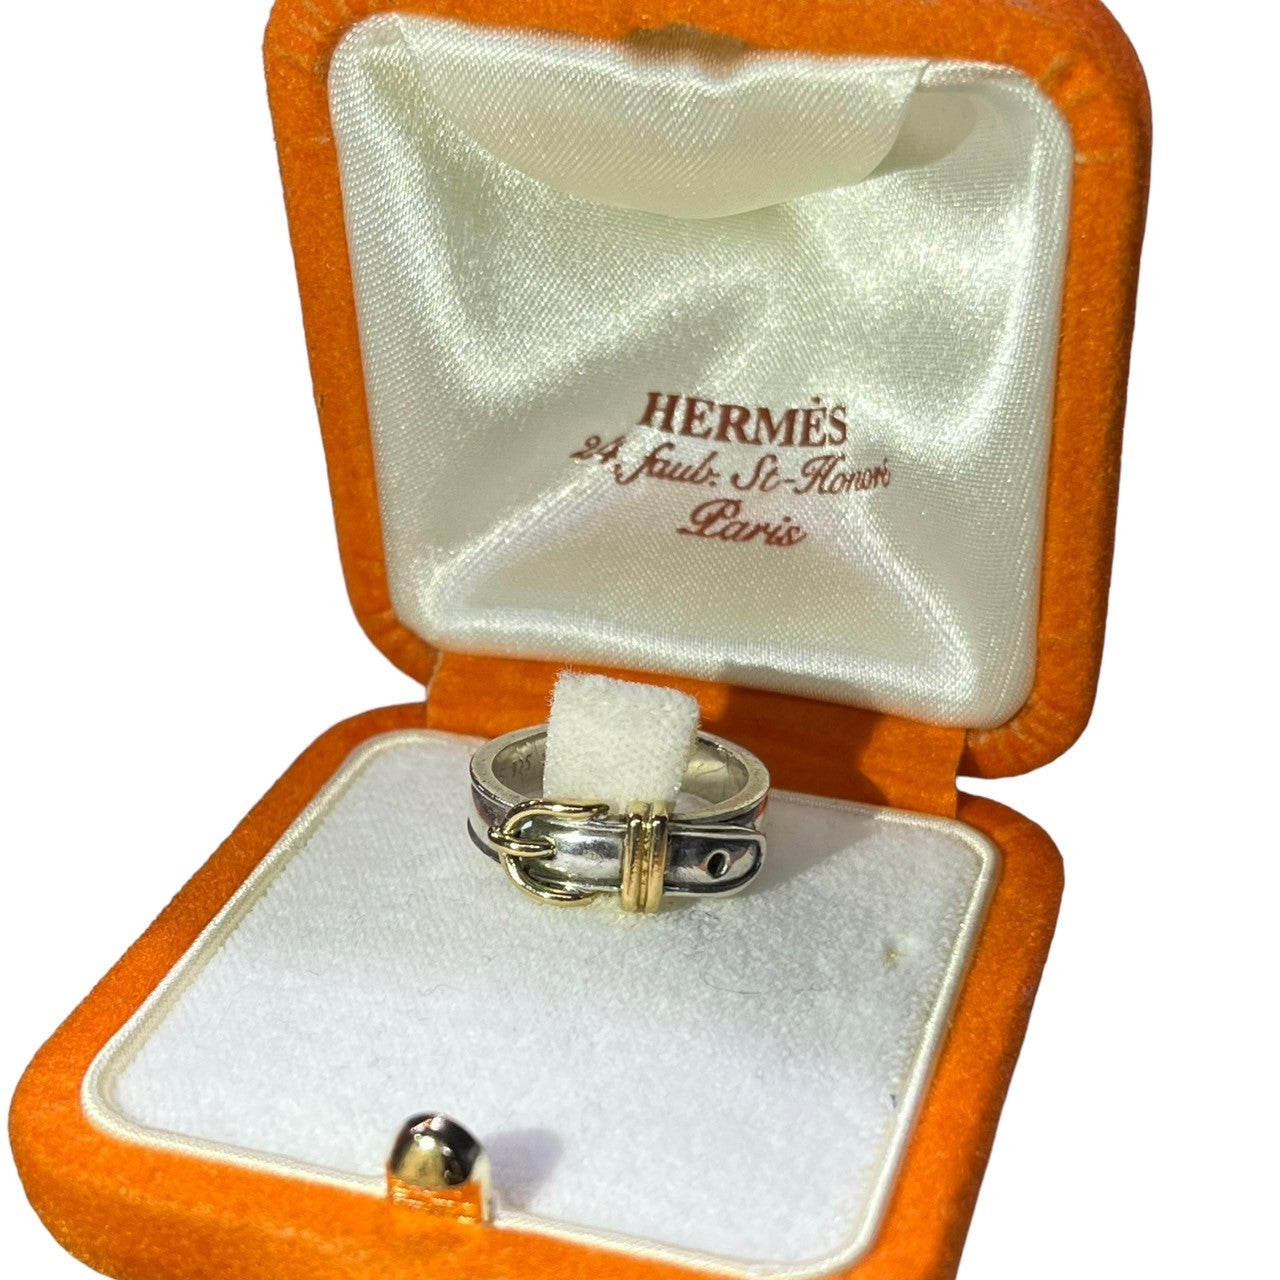 HERMES(エルメス) sun tulle belt ring サンチュールベルト リング 53(13号程度) シルバー×ゴールド コンビ 箱・ケース付属 silver 925